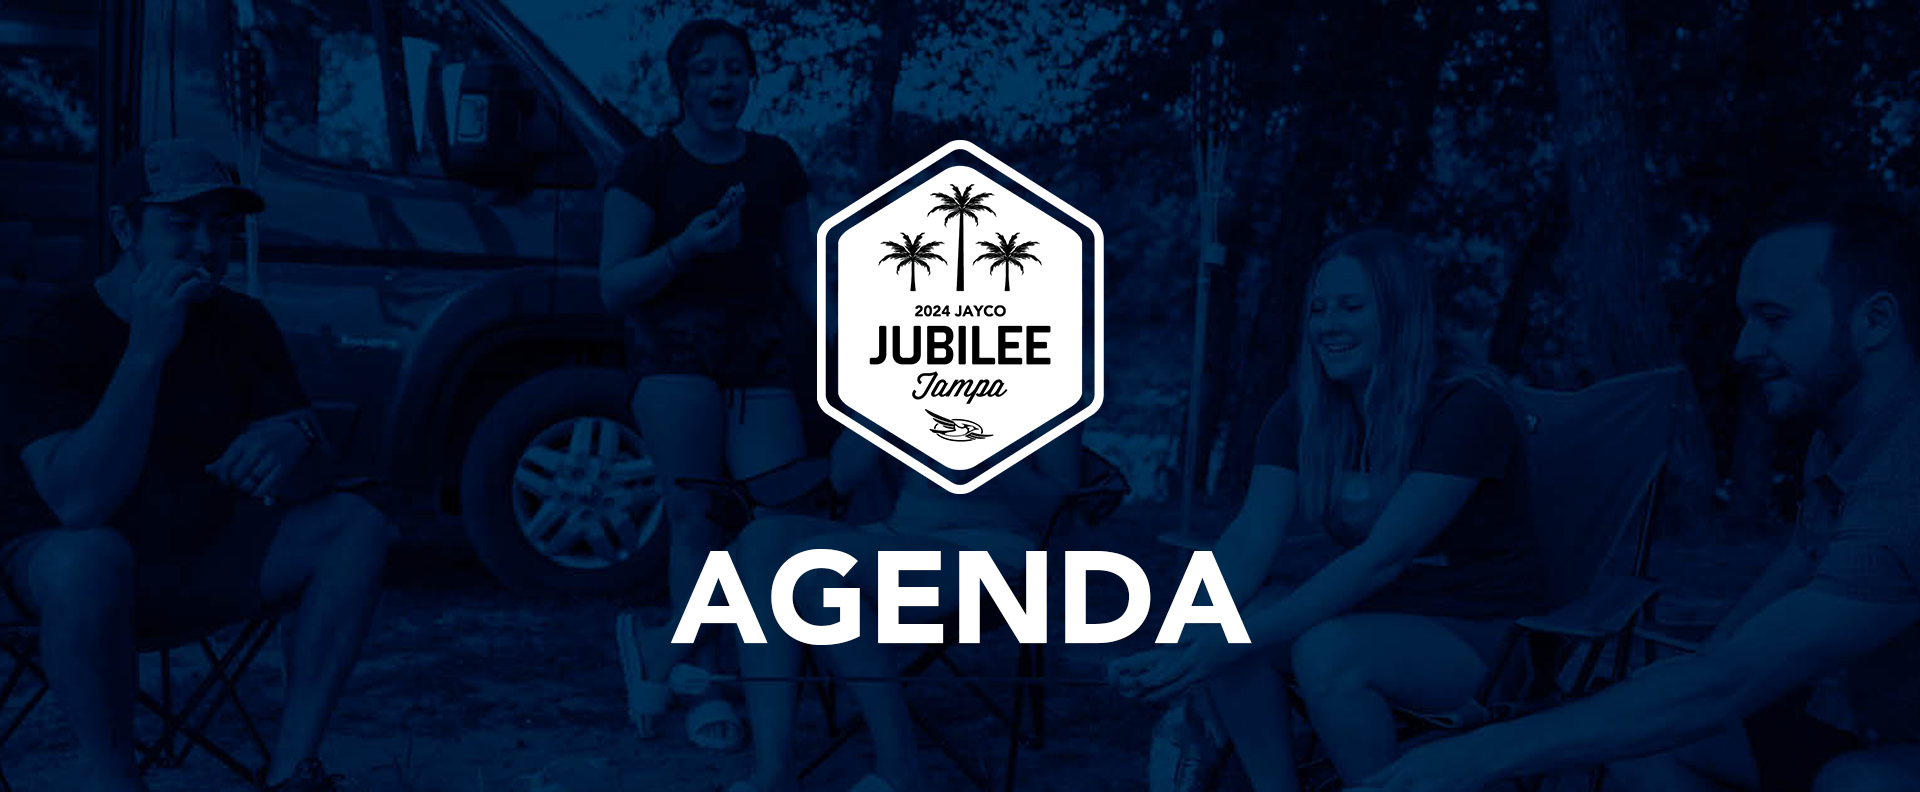 2024 Jayco Jubilee Tampa Agenda & Registration